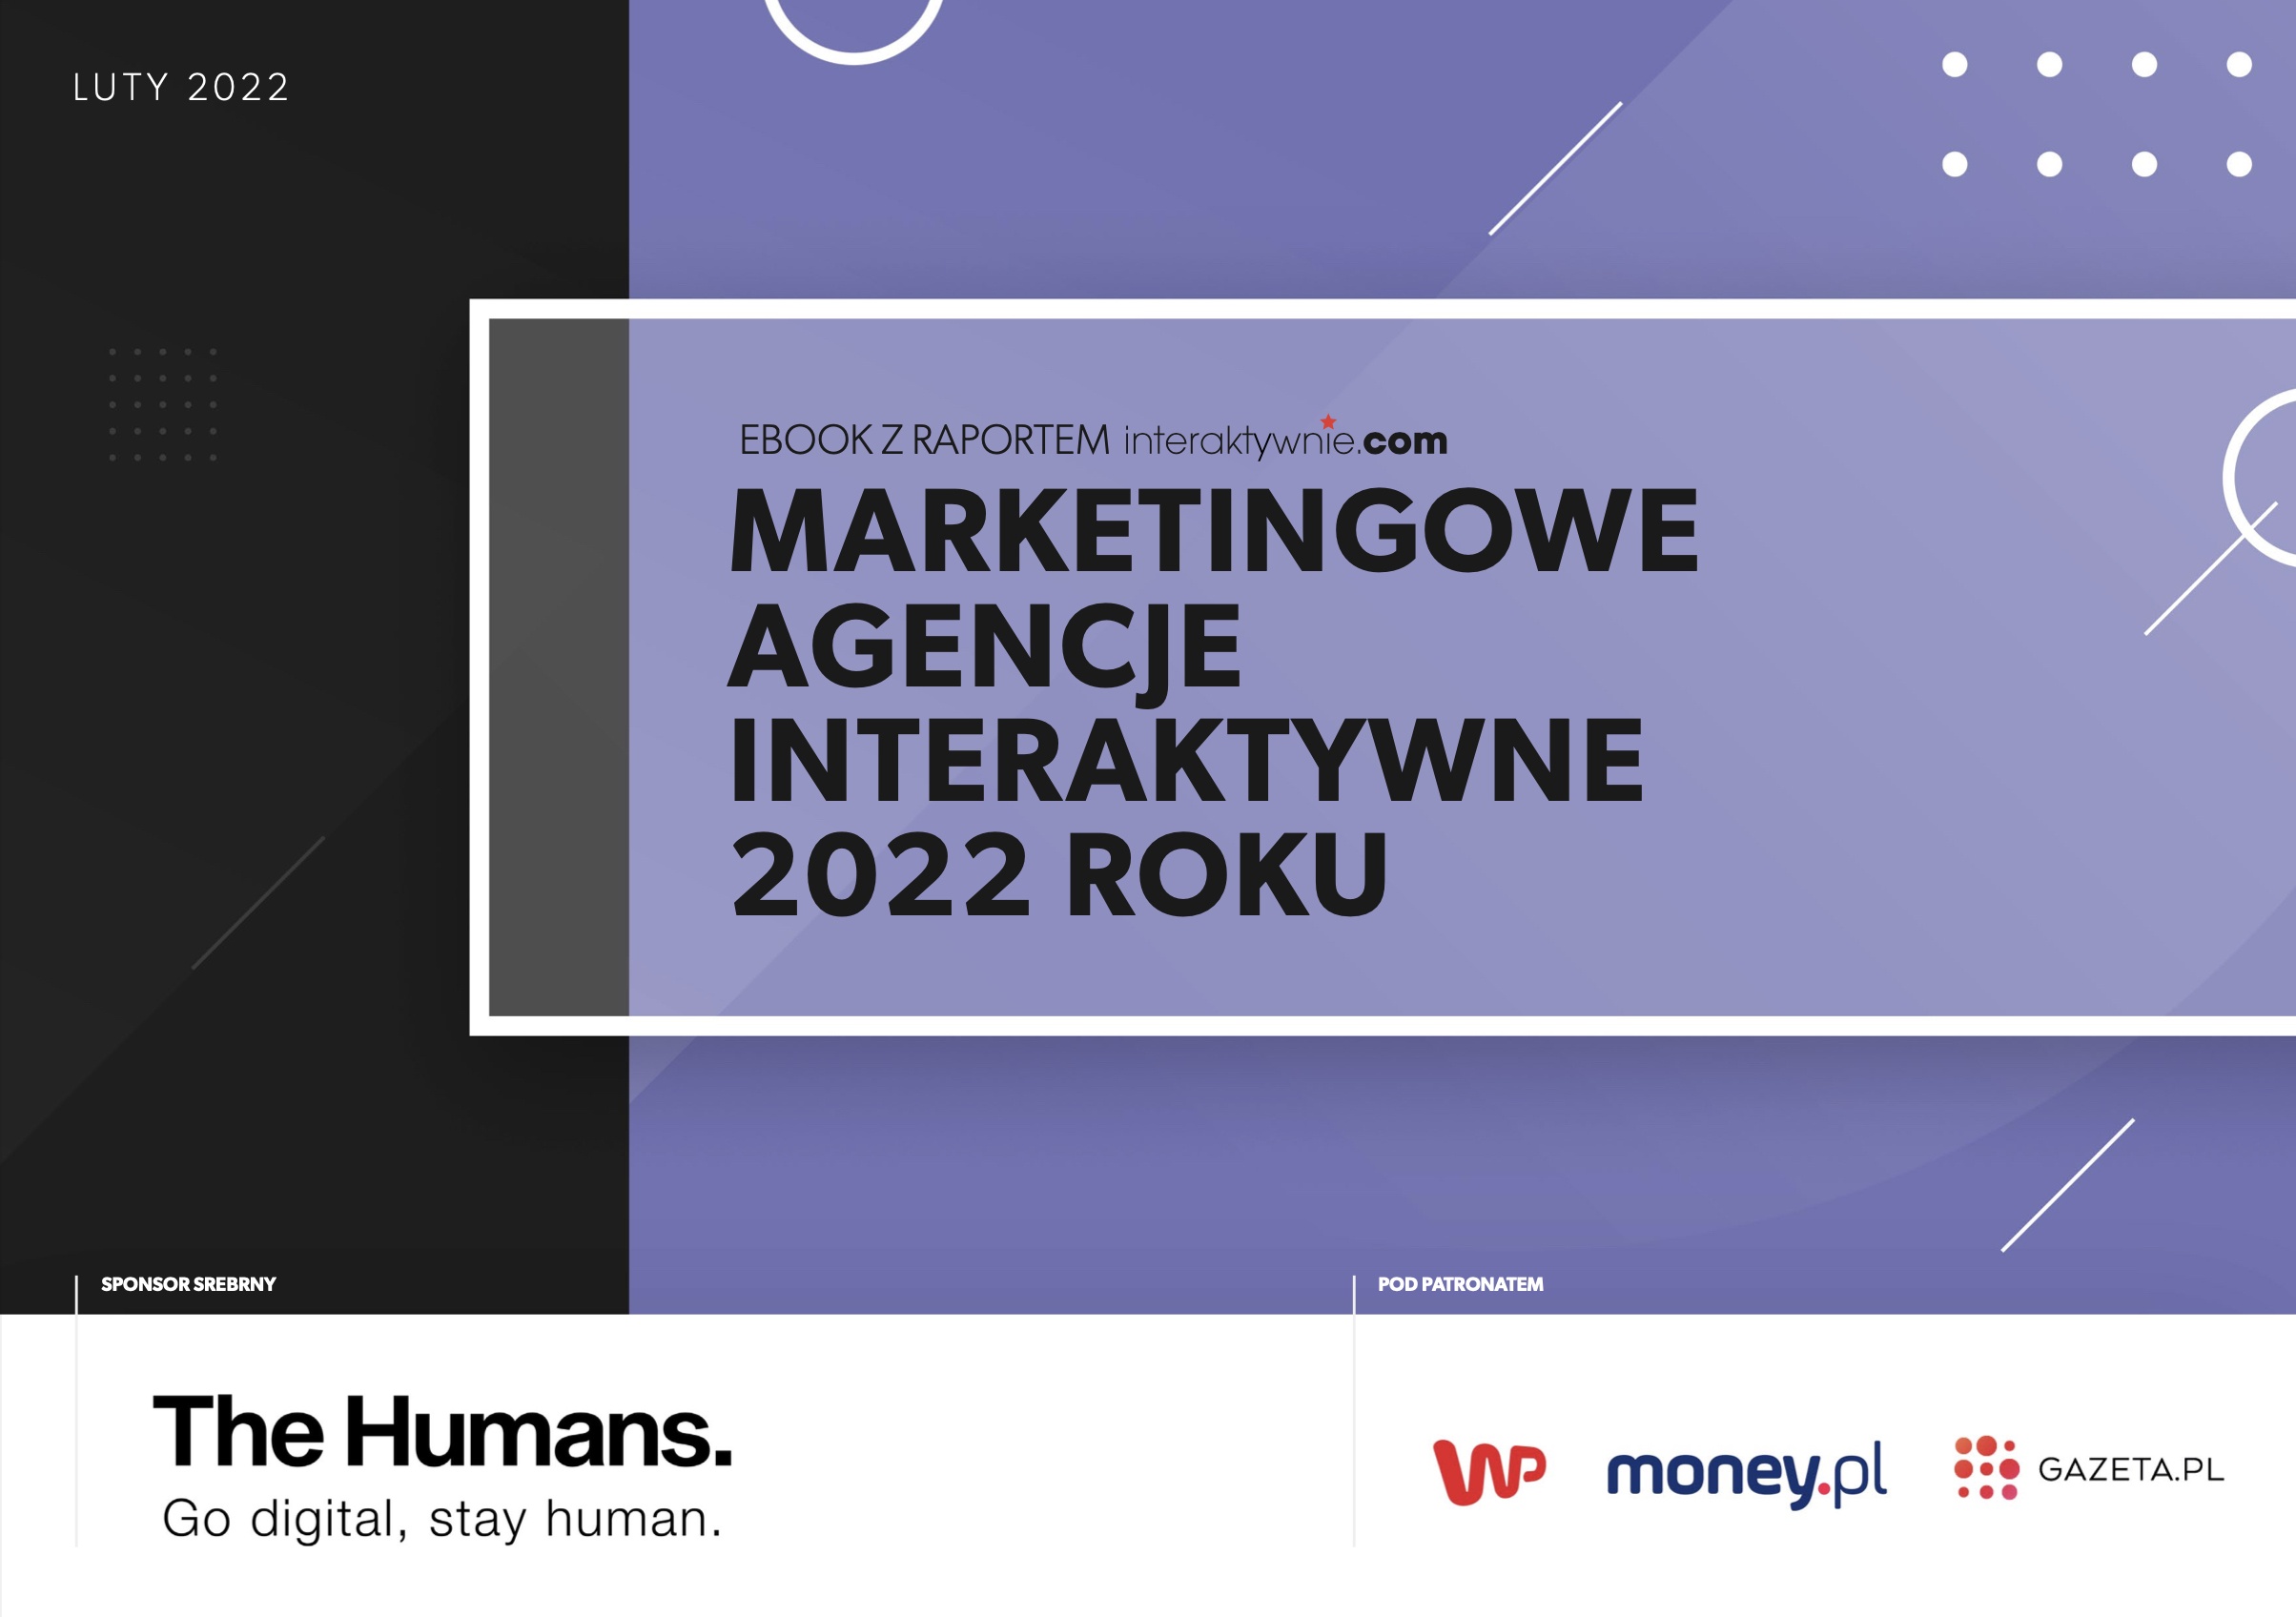 Ranking of marketing agencies in 2022